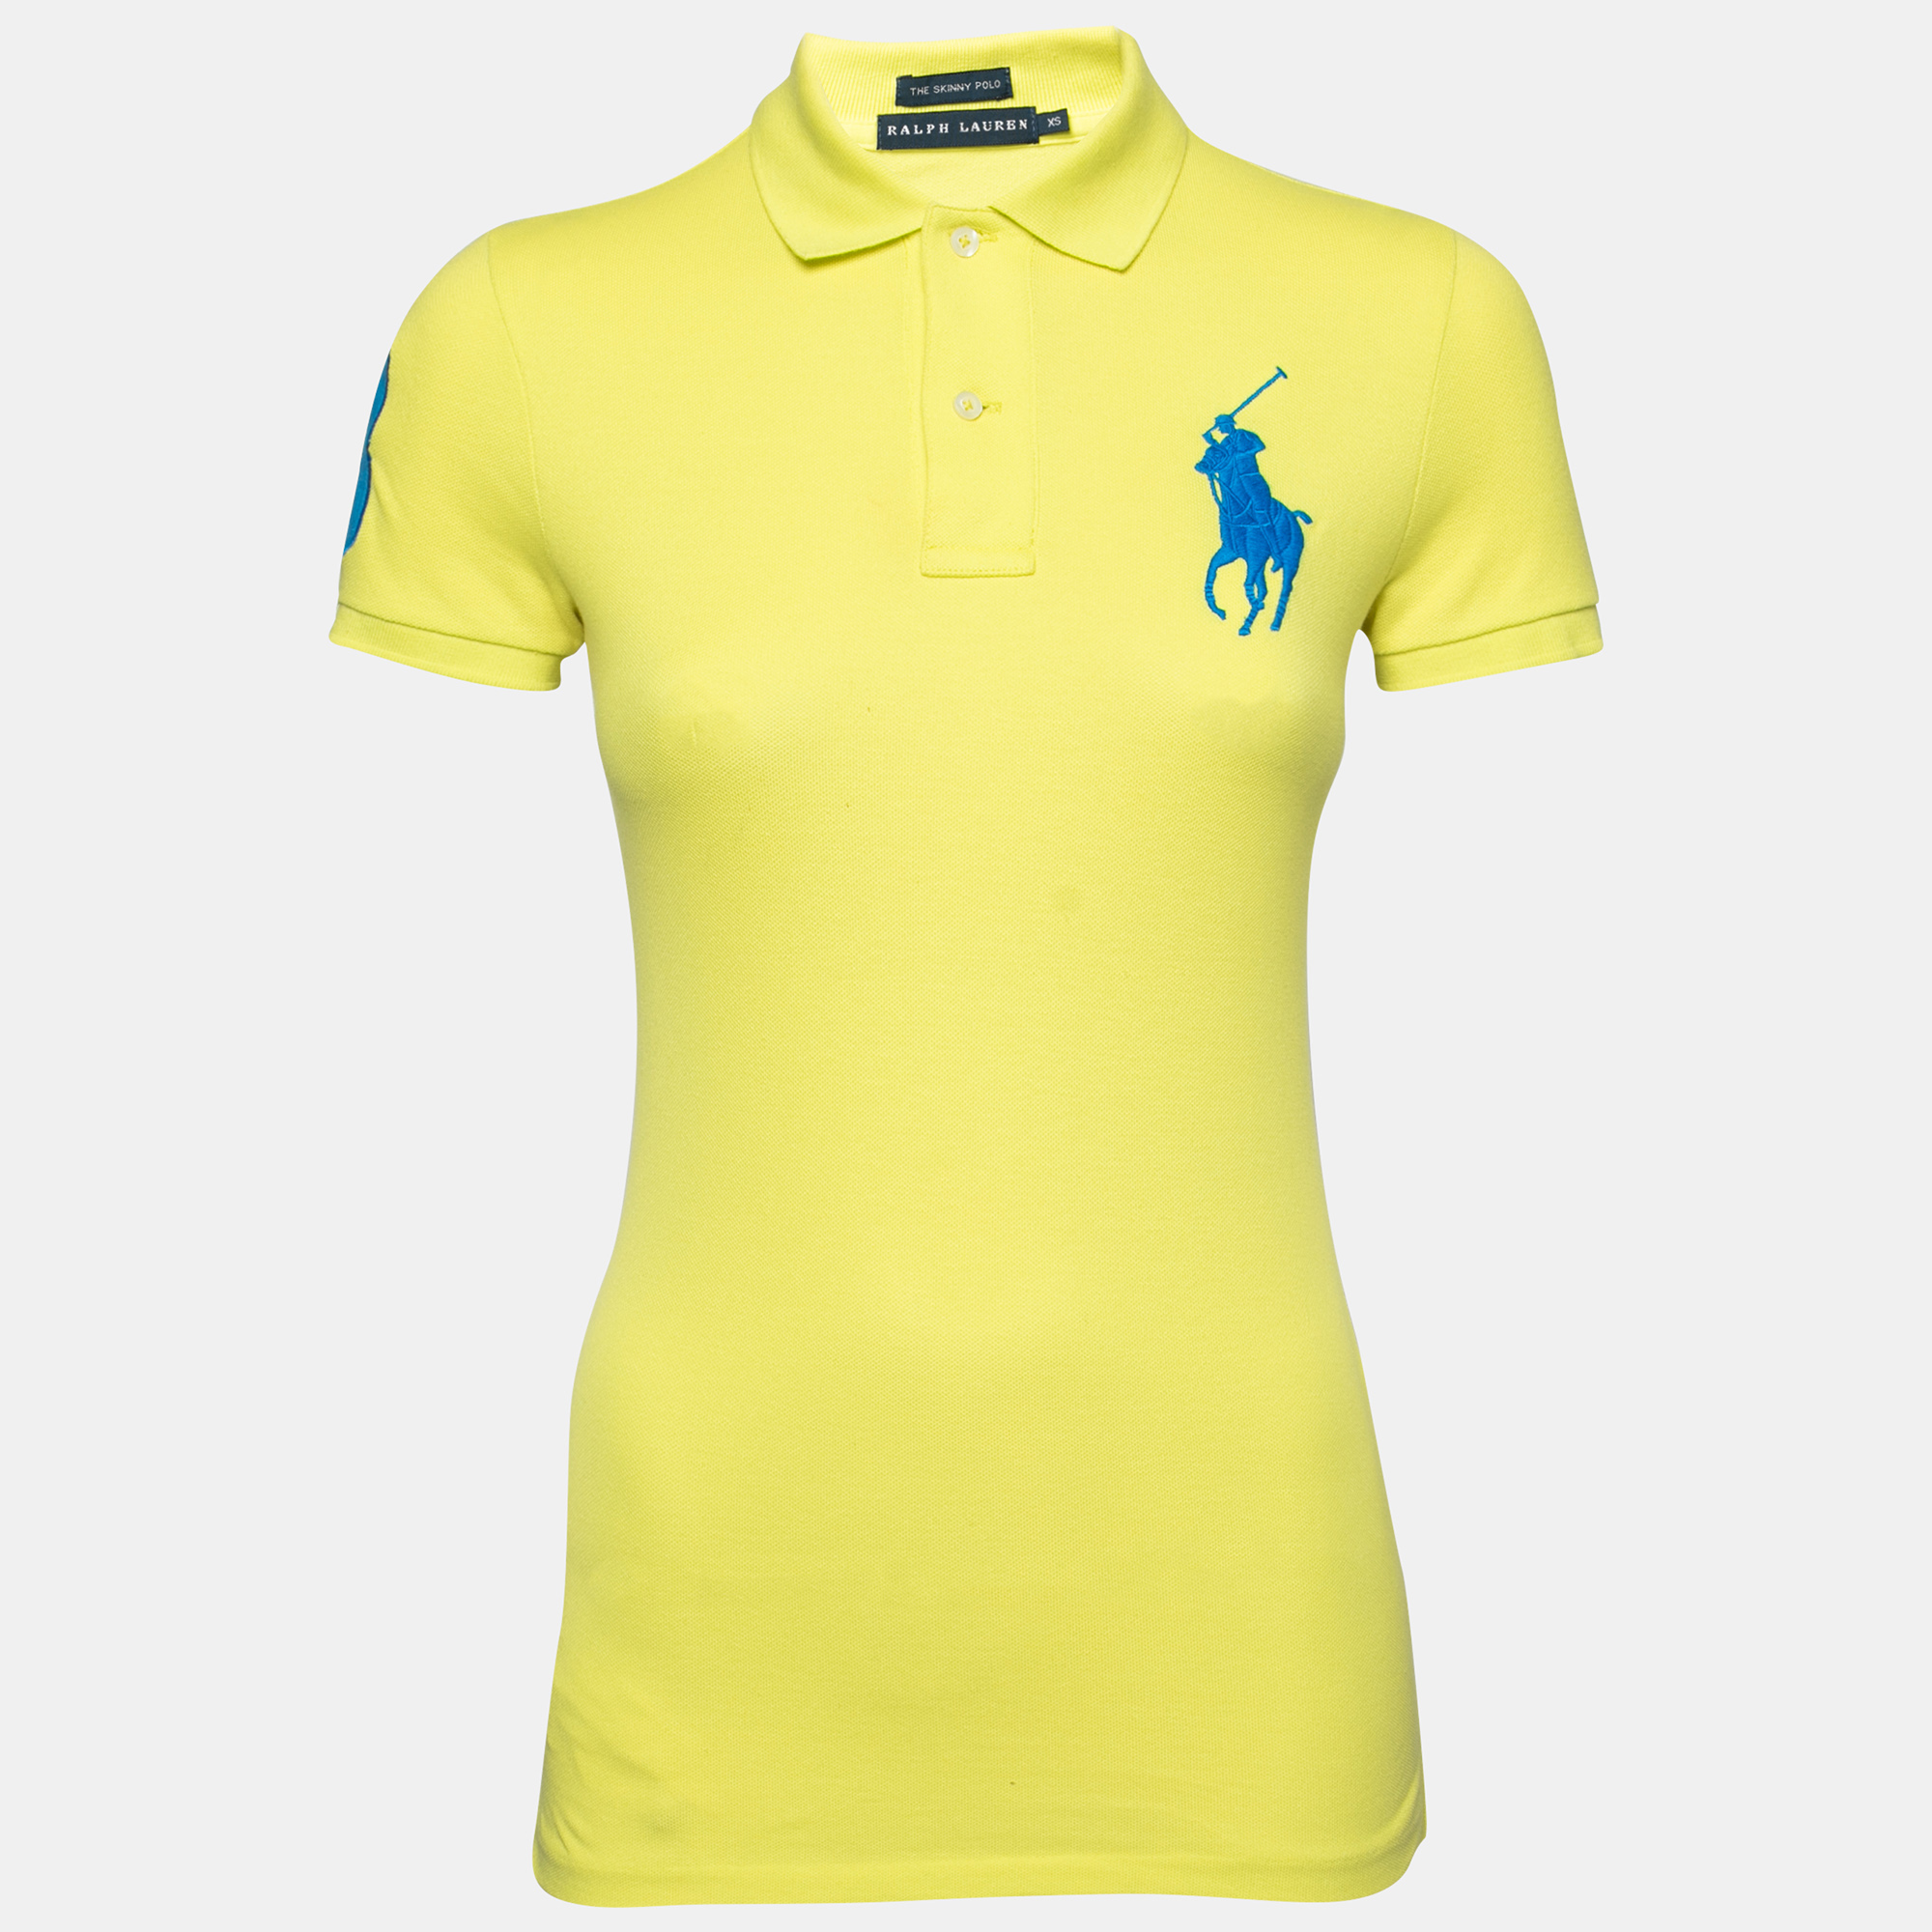 Ralph Lauren Yellow Cotton Pique Skinny Polo T-Shirt XS